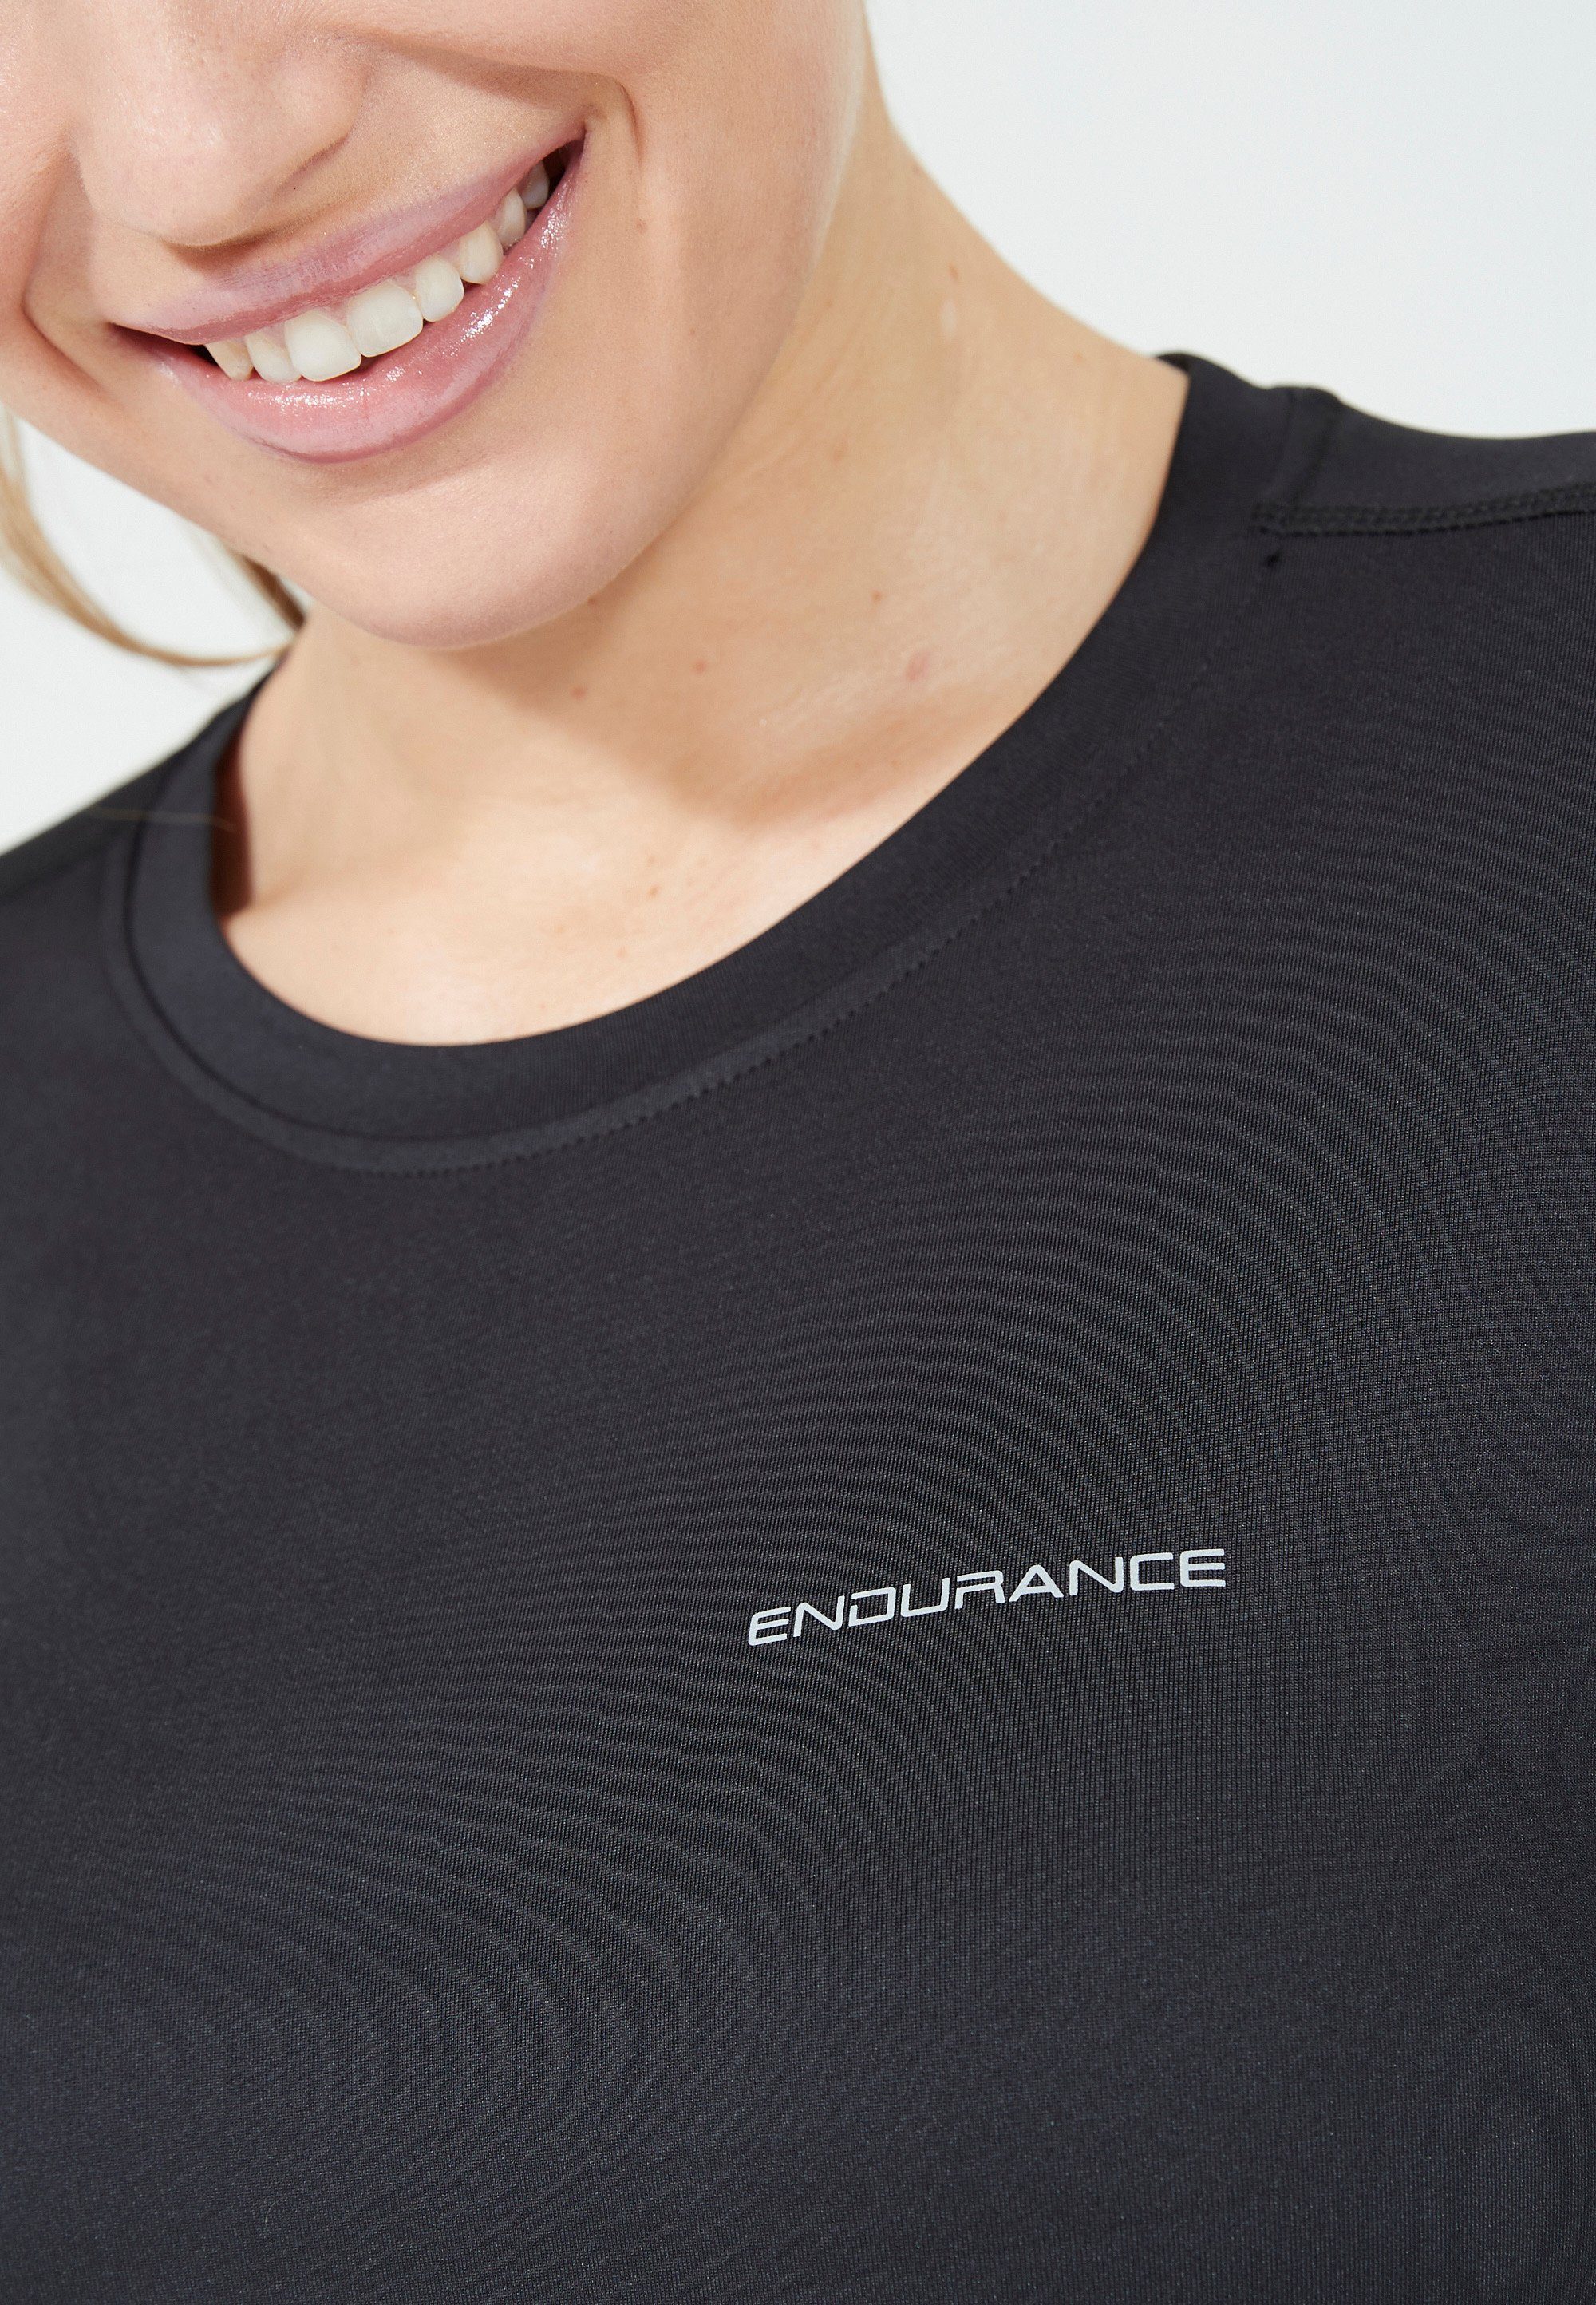 (1-tlg) Yonan QUICK ENDURANCE Langarmshirt mit schwarz DRY-Technologie innovativer